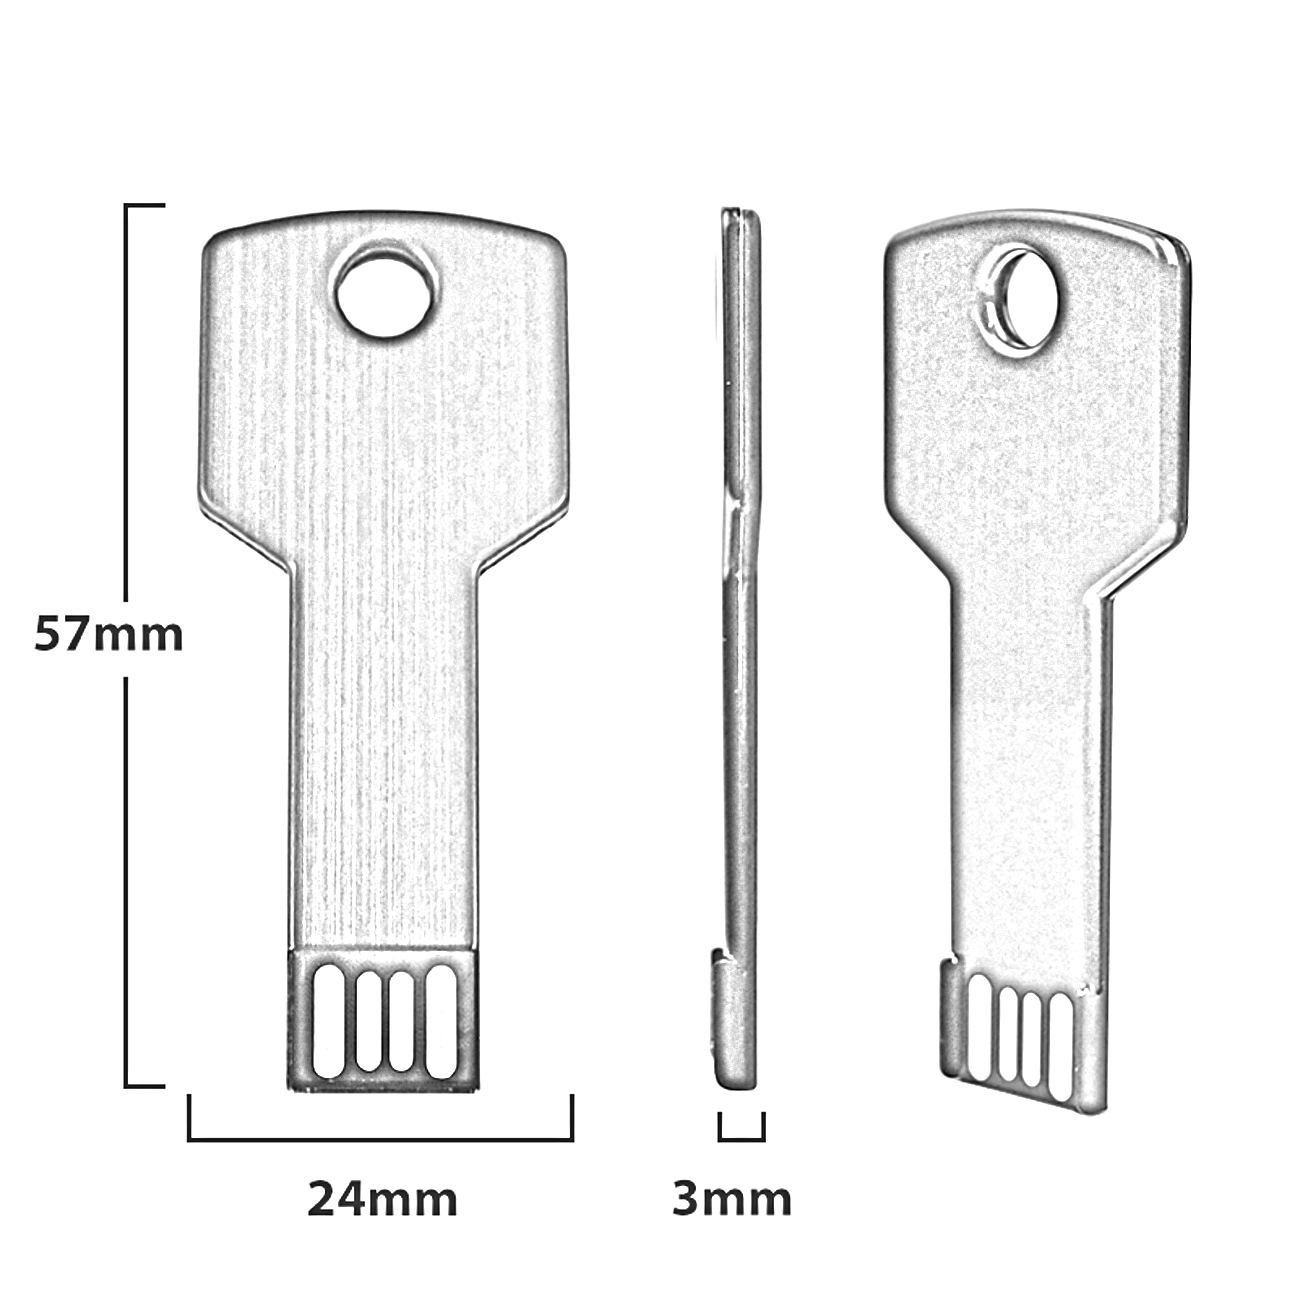 GB) 4GB GERMANY Lila USB 4 USB-Stick (Lila, Key